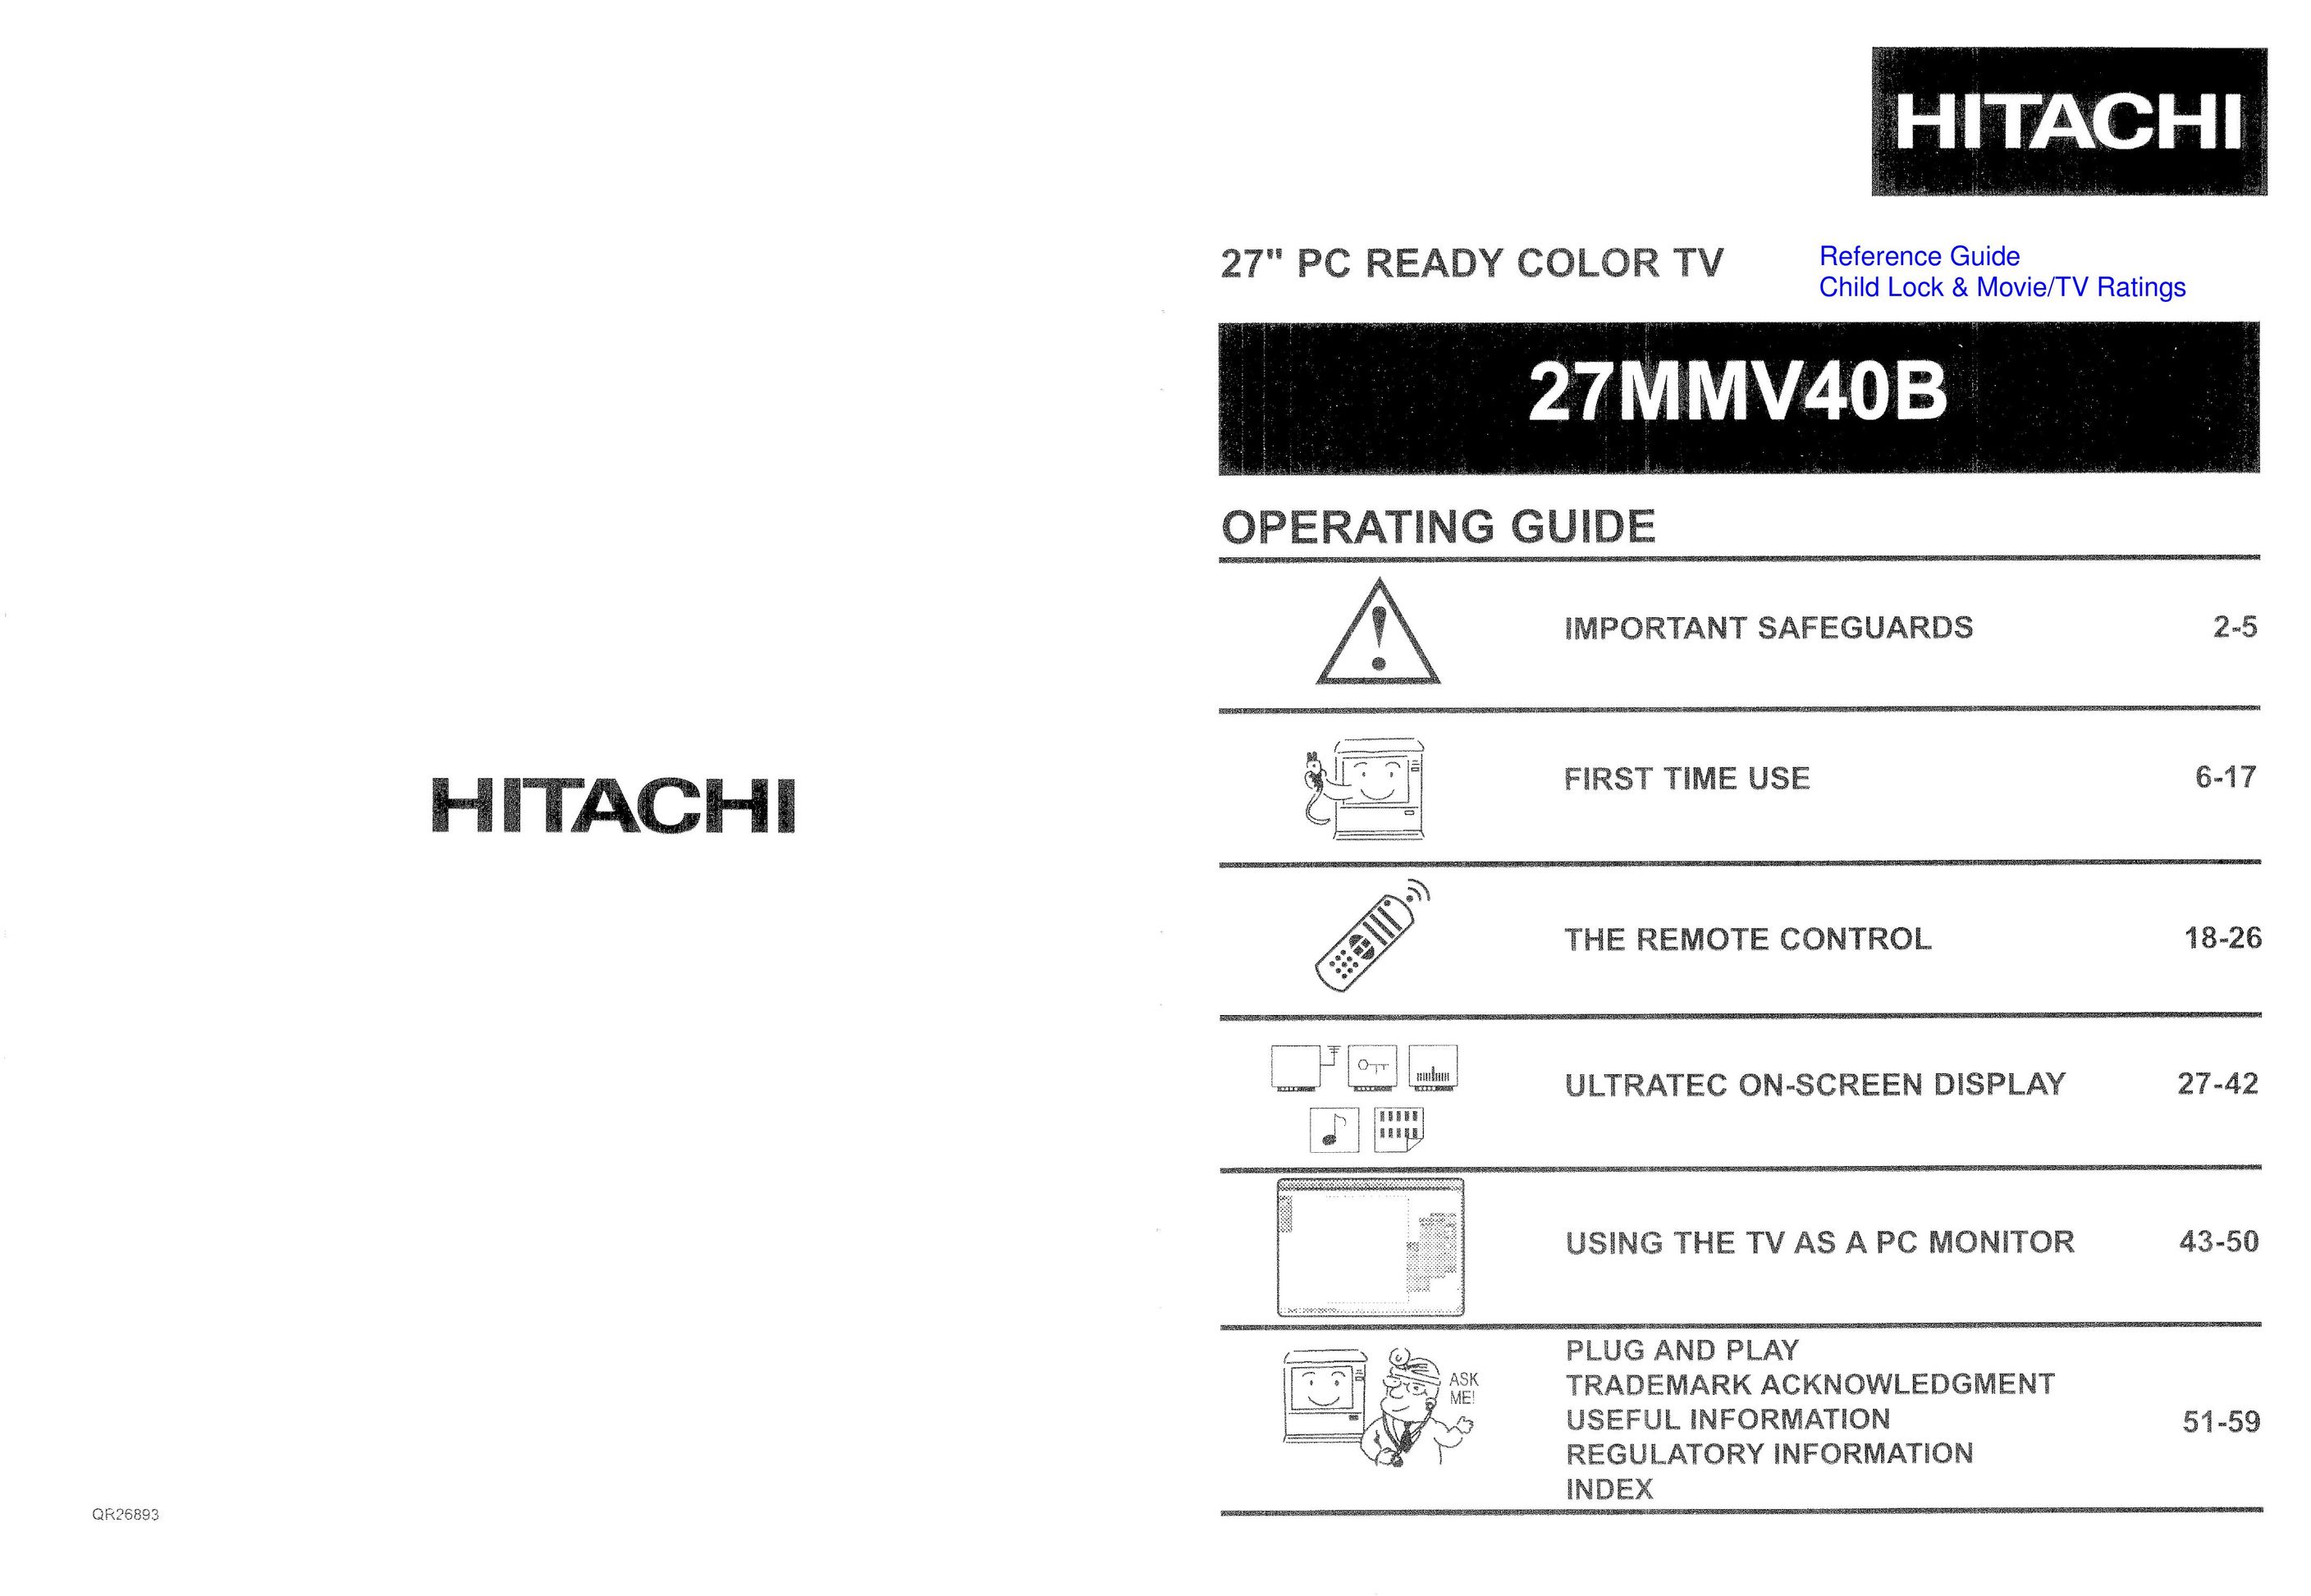 Hitachi 27MMV40B CRT Television User Manual